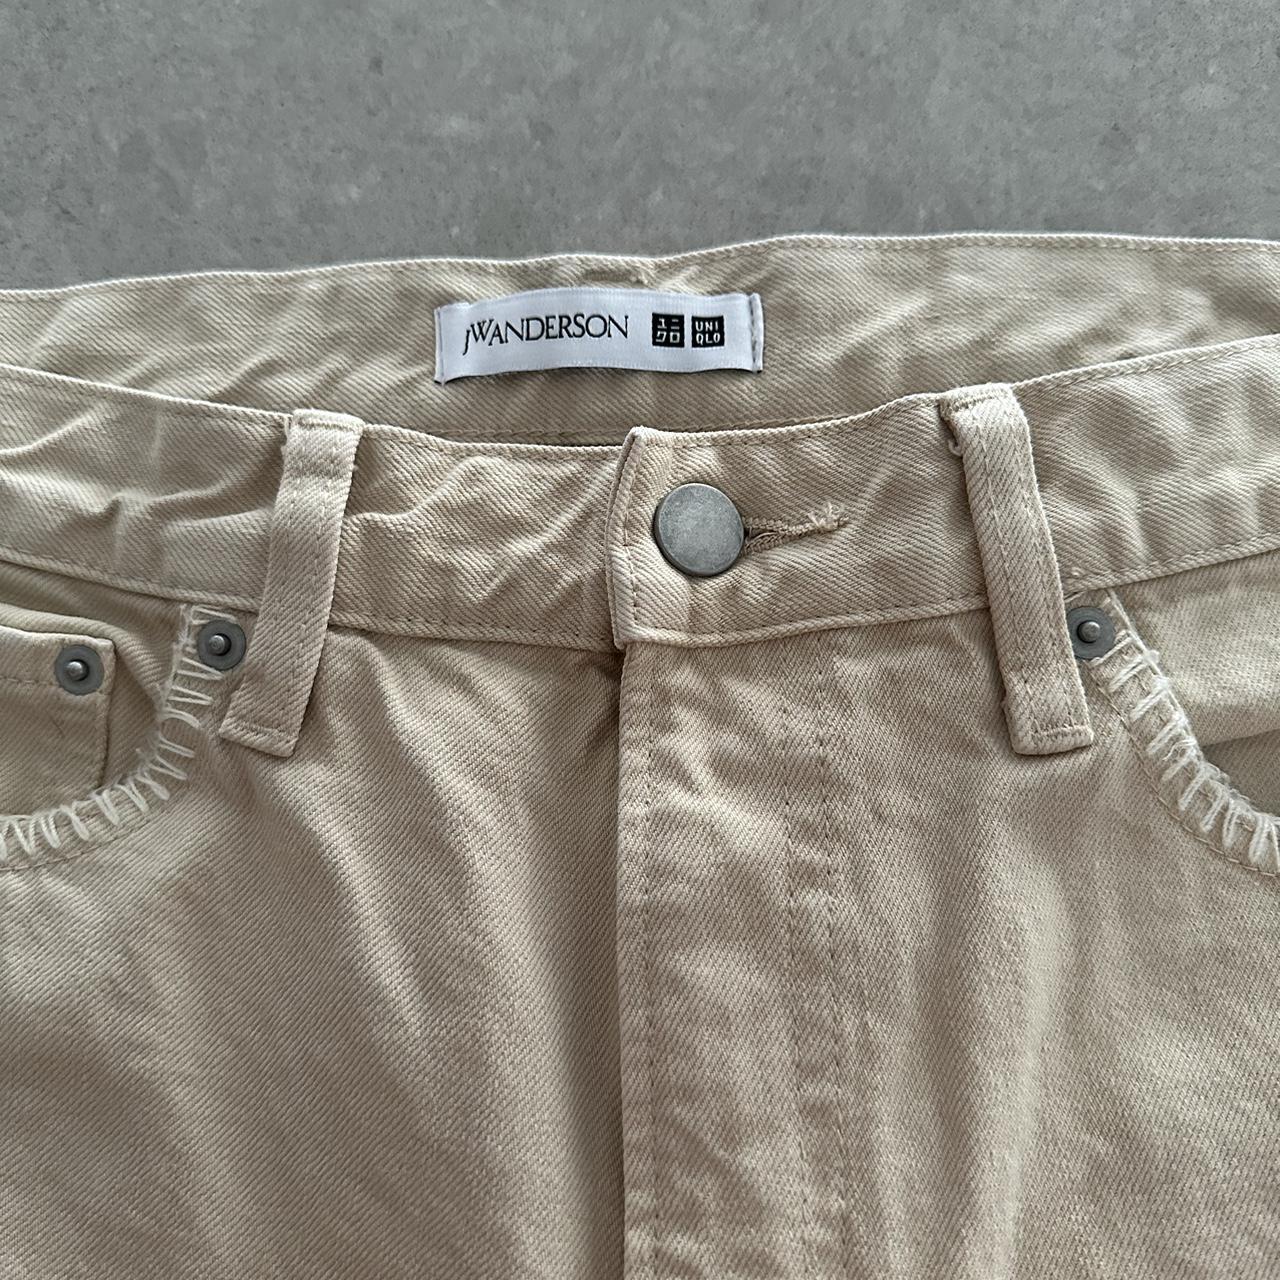 Uniqlo JW Anderson collaboration pants Size 29 Brand... - Depop